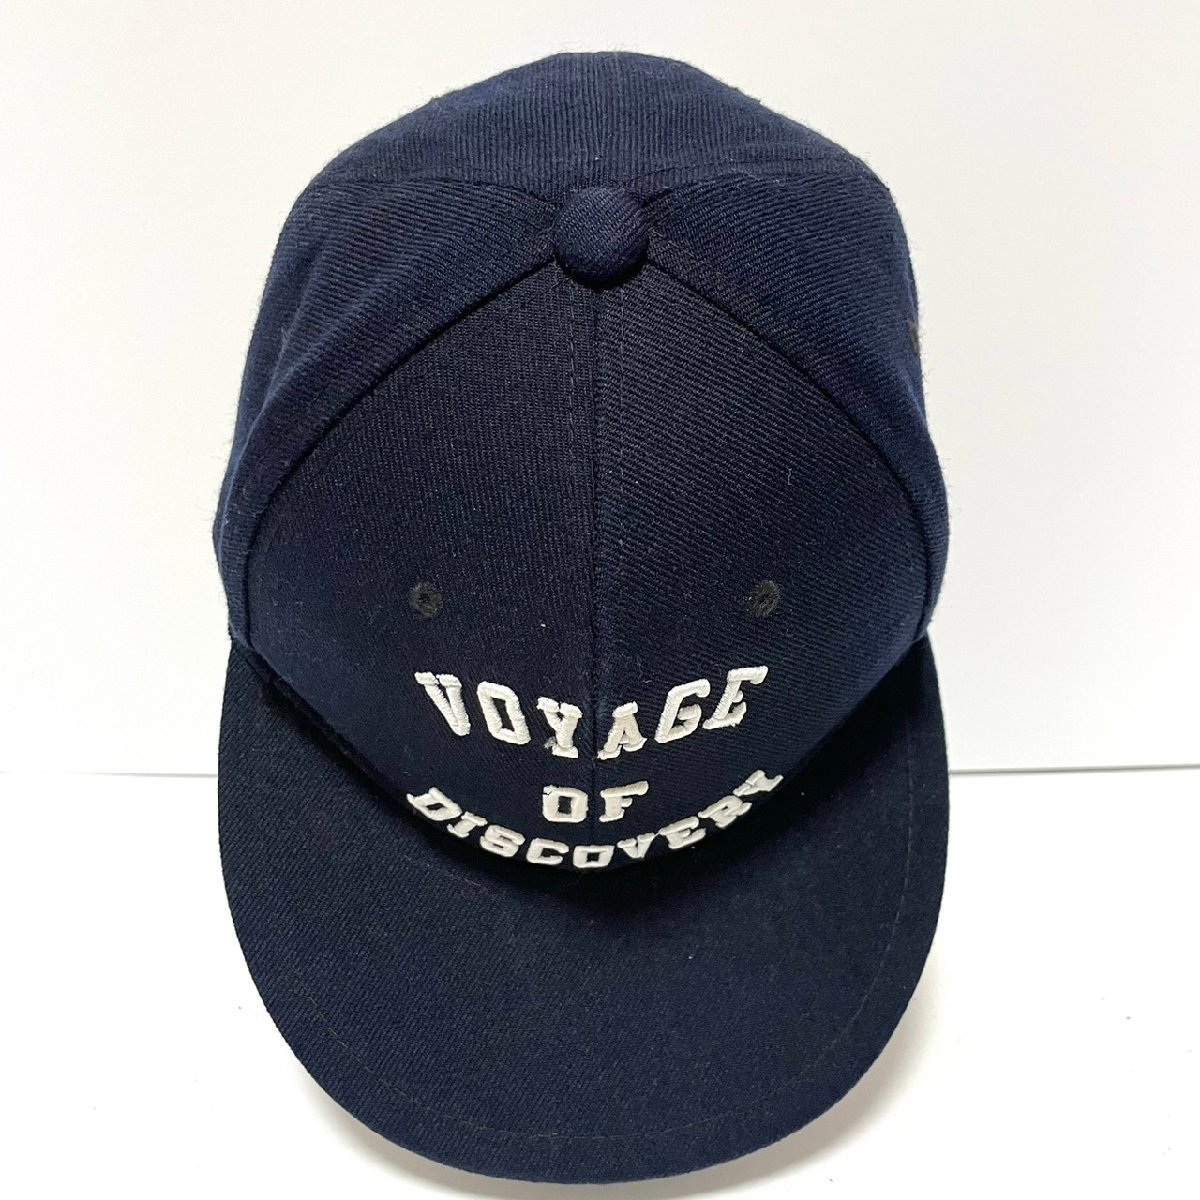 (^w^)b ヒデトレーディング キャップ 帽子 CAP ネイビー HIDETRADING VOYAGE OF DISCOVERY NYC メッセージ スナップバック C0500EEの画像6